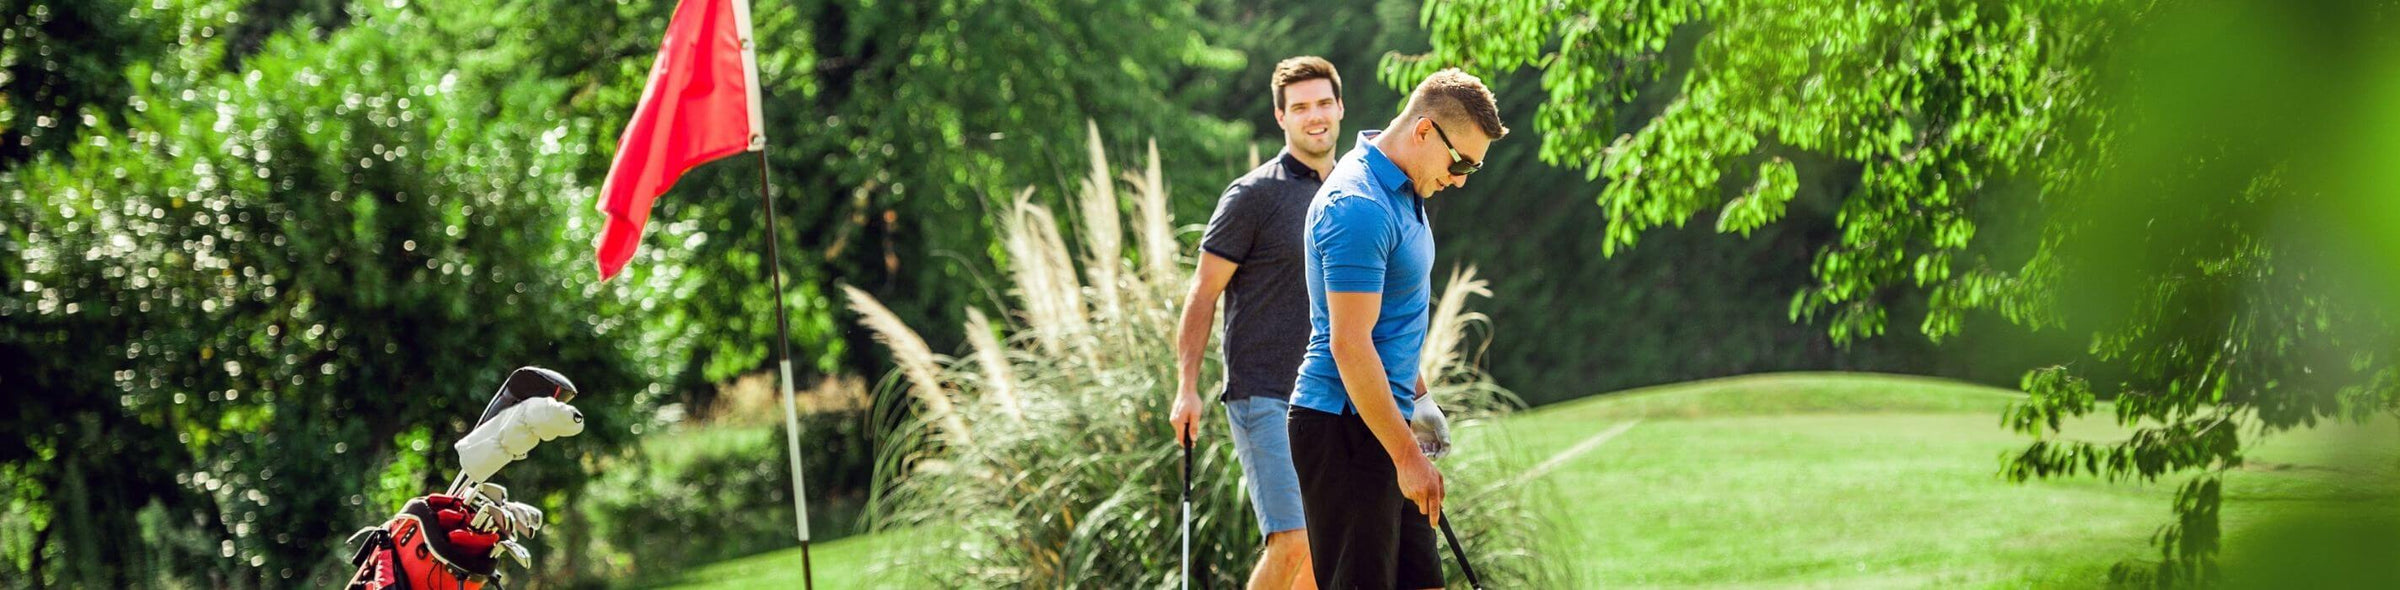 Two golfers walking the green